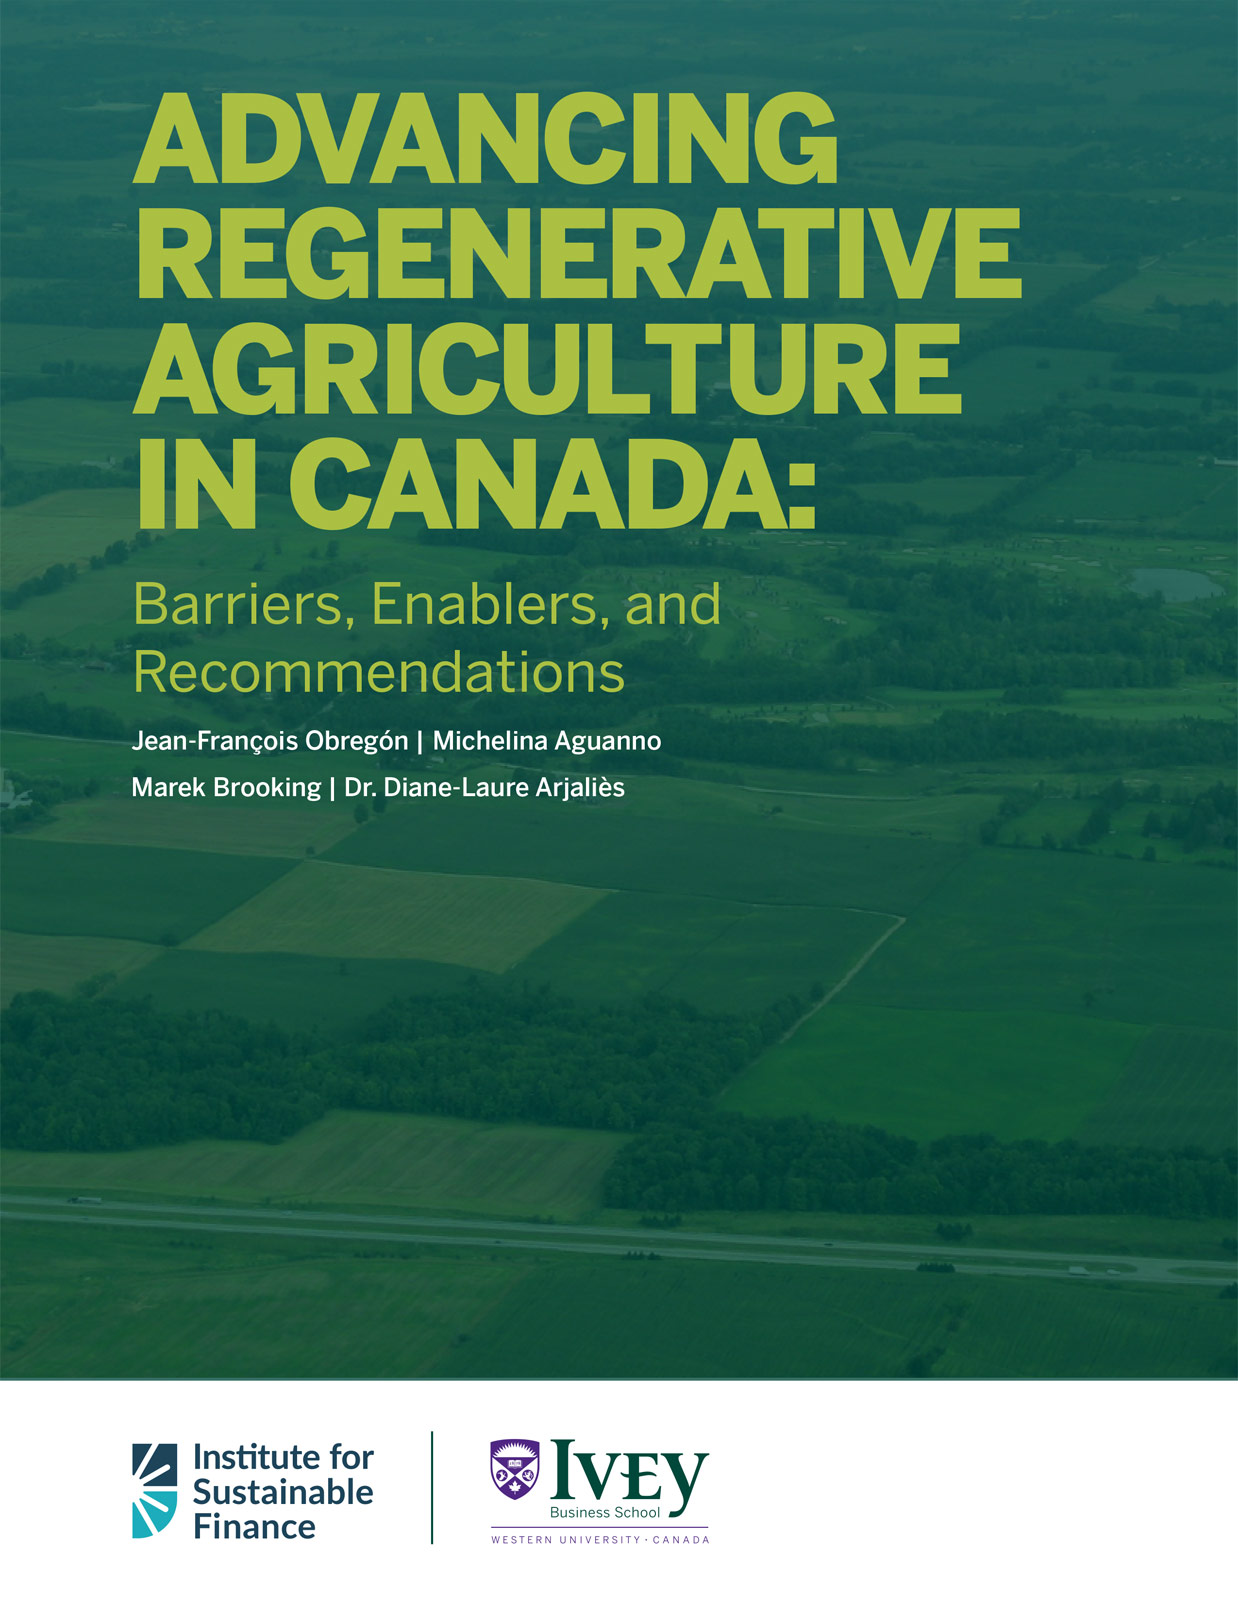 ADVANCING REGENERATIVE AGRICULTURE IN CANADA